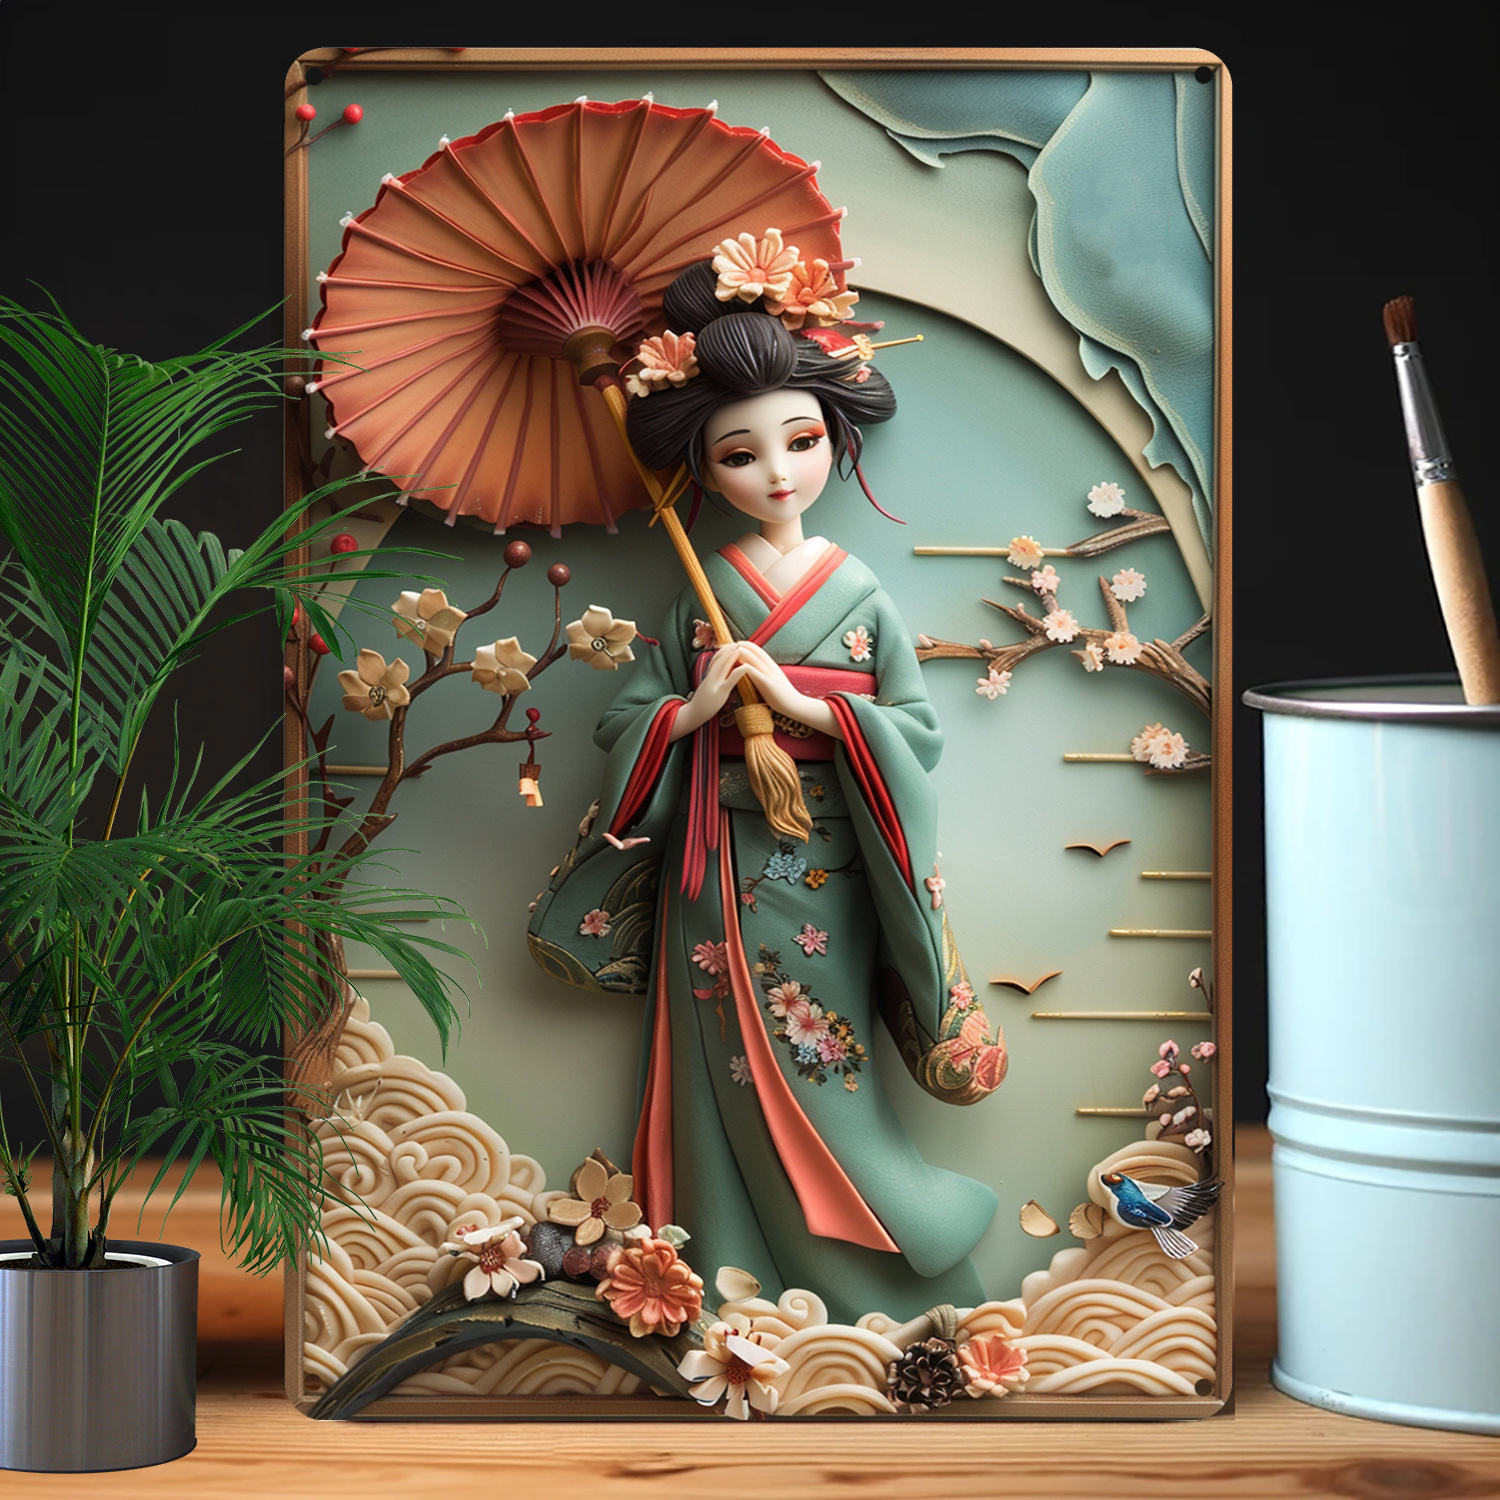 

Japanese Kimono Woman Aluminum Wall Art - 1pc 8x12 Inch 3d Visual Effect Metal Tin Sign - Durable, Moisture Resistant Home Decor For Living Room, Bathroom, Garden, Studio - Unique Vintage Gift A1354